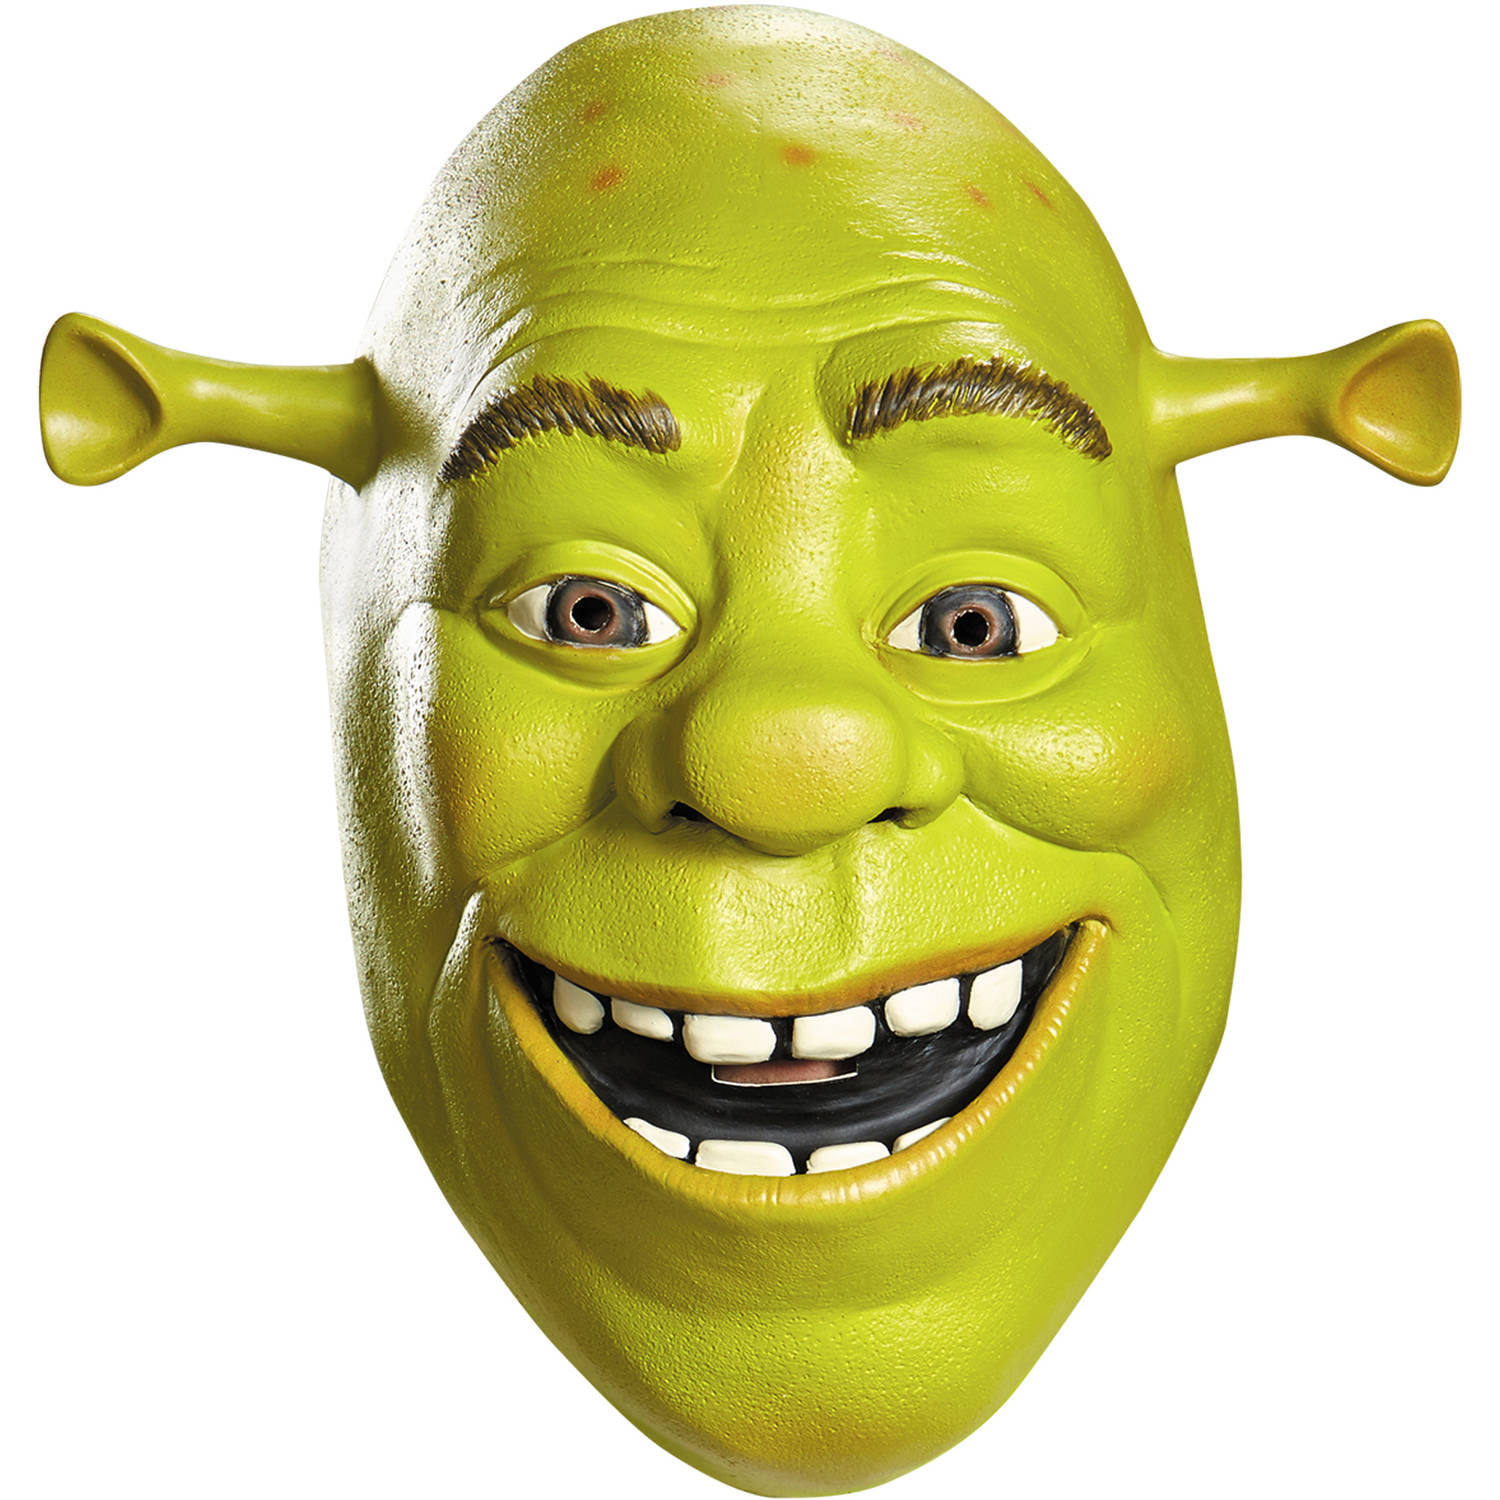 Shrek Latex Mask Adult Halloween Accessory Walmart Com Walmart Com